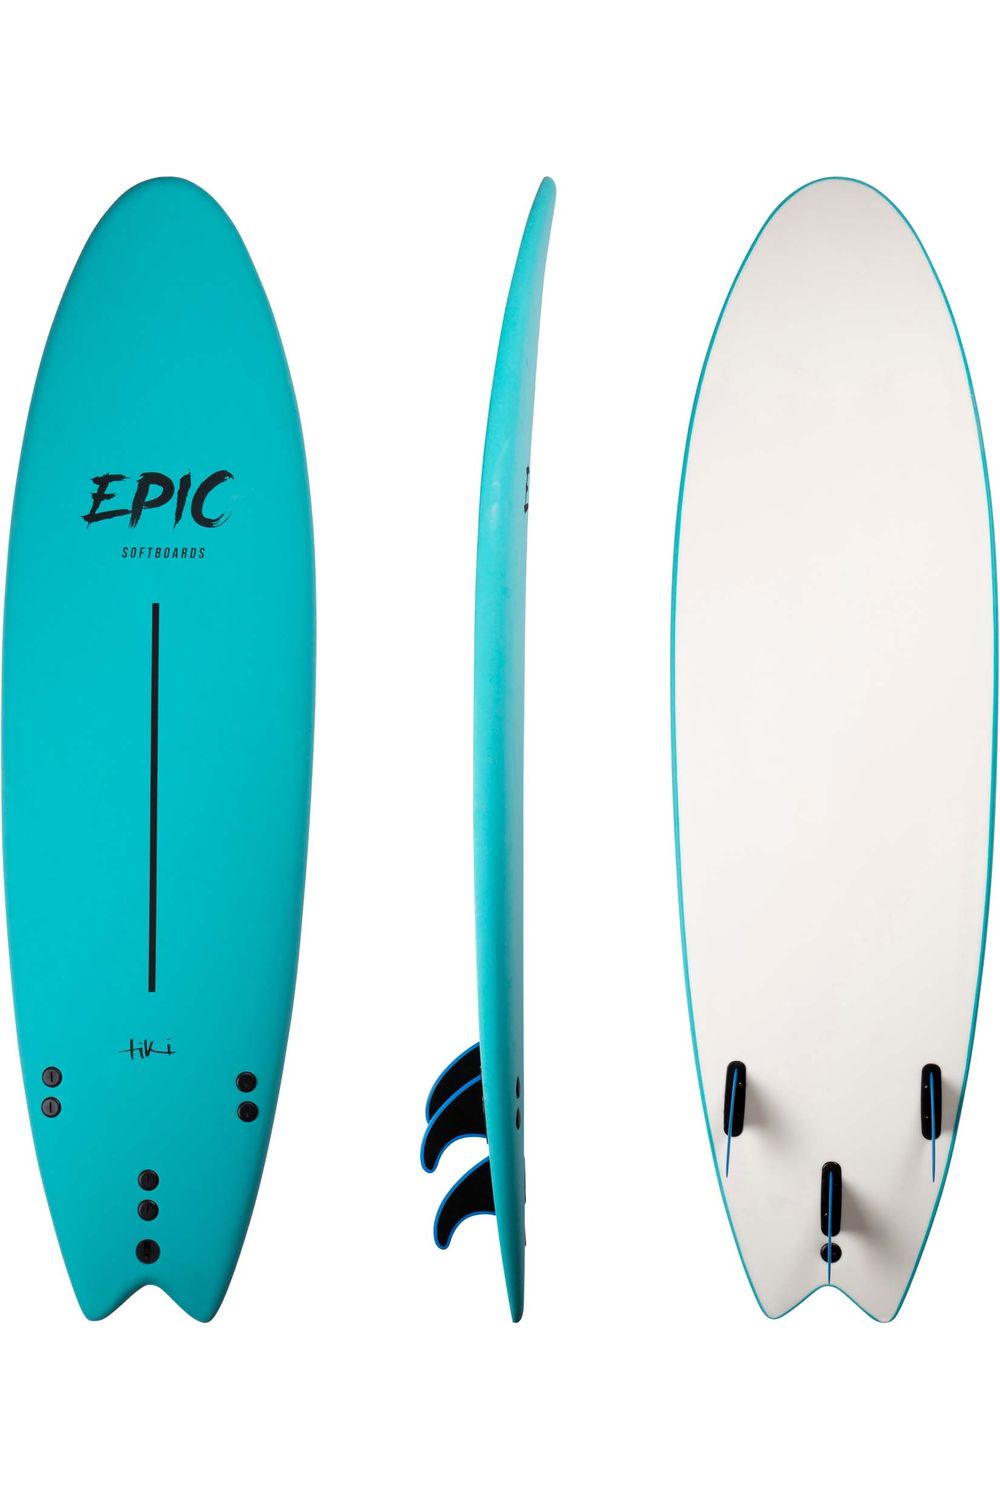 Tiki Epic 6'6 Softboard Bundle Deal In Blue